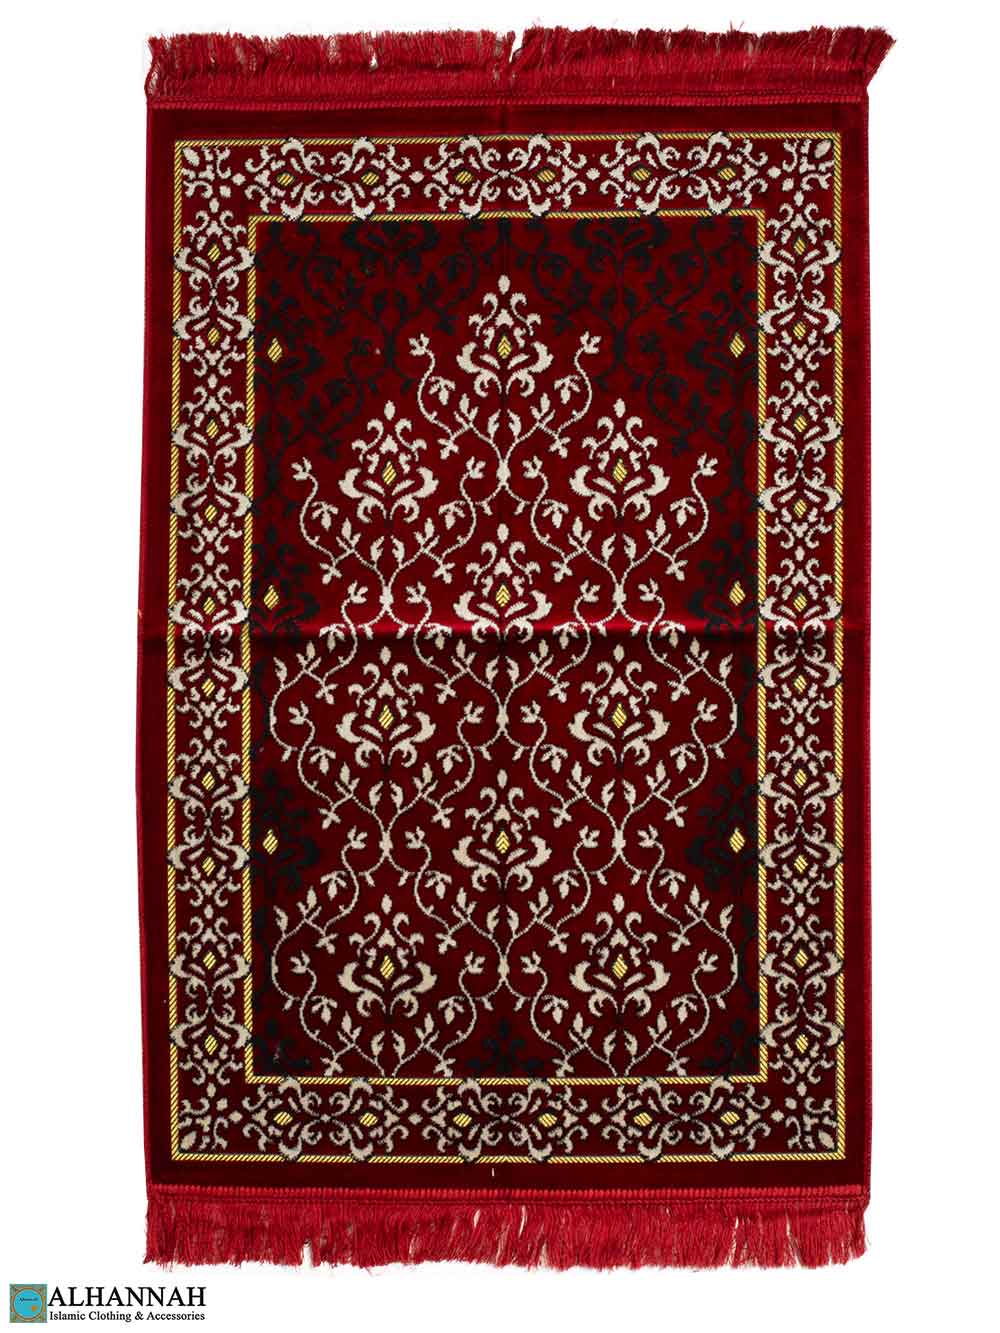 Turkish Prayer Rug Damask Design in Red